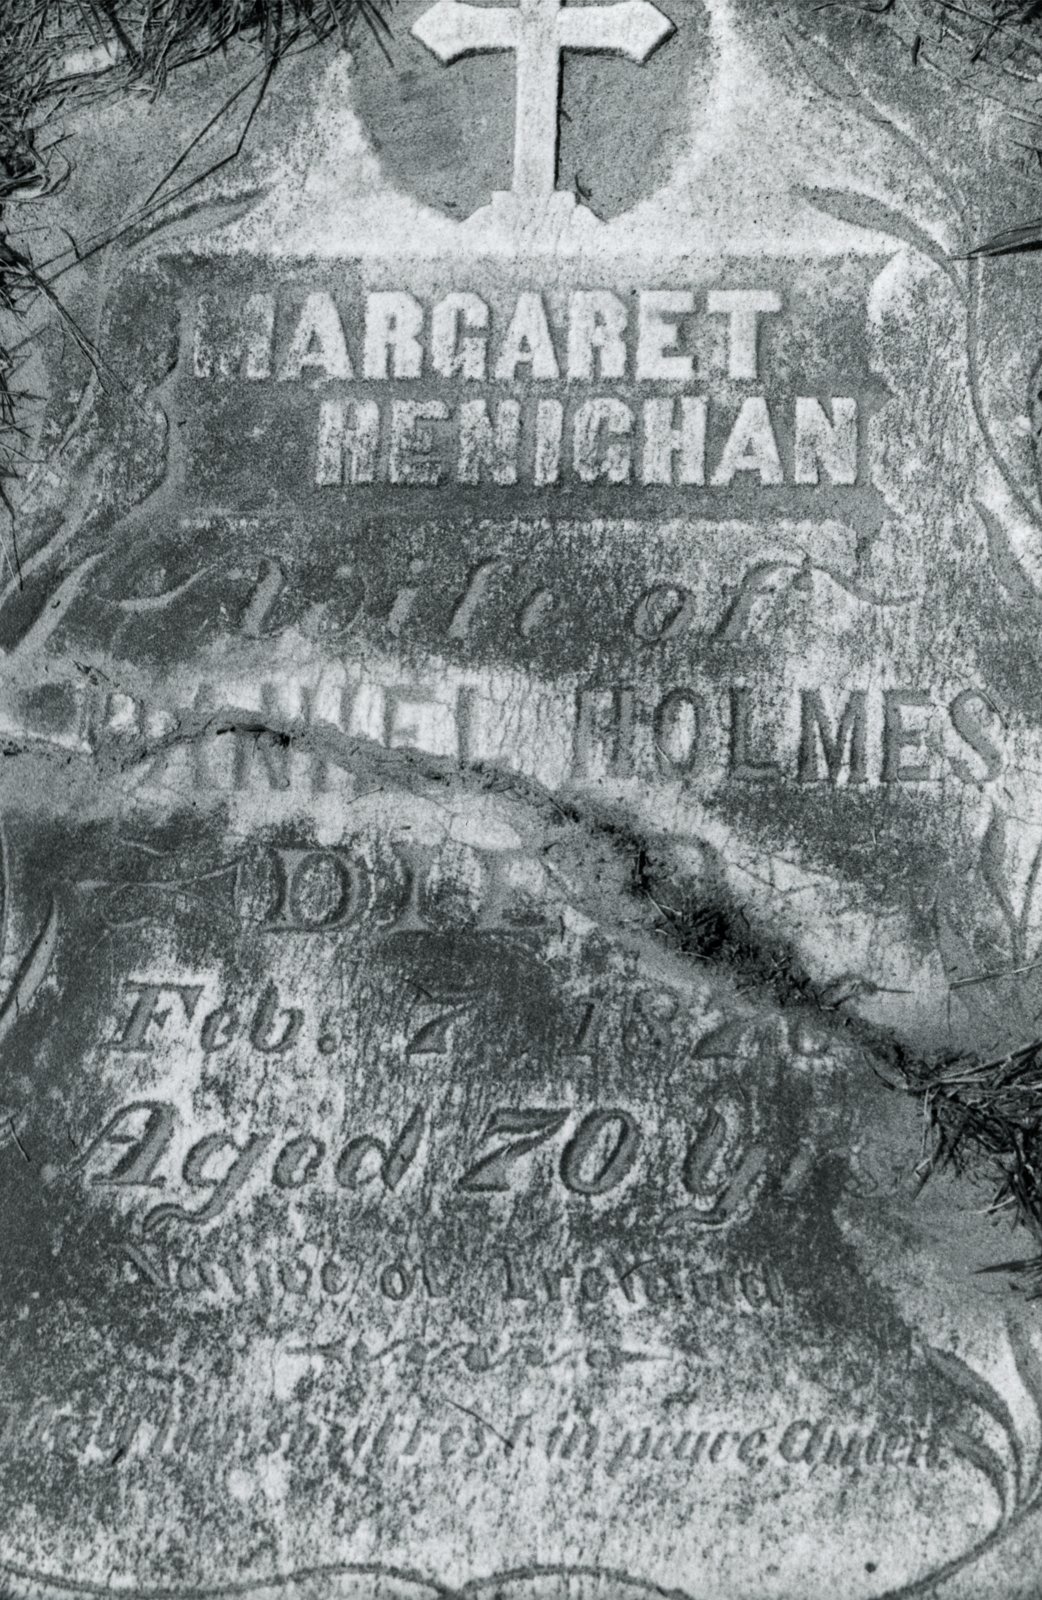 Headstone for Bryan’s great-grandmother Margaret Henigan